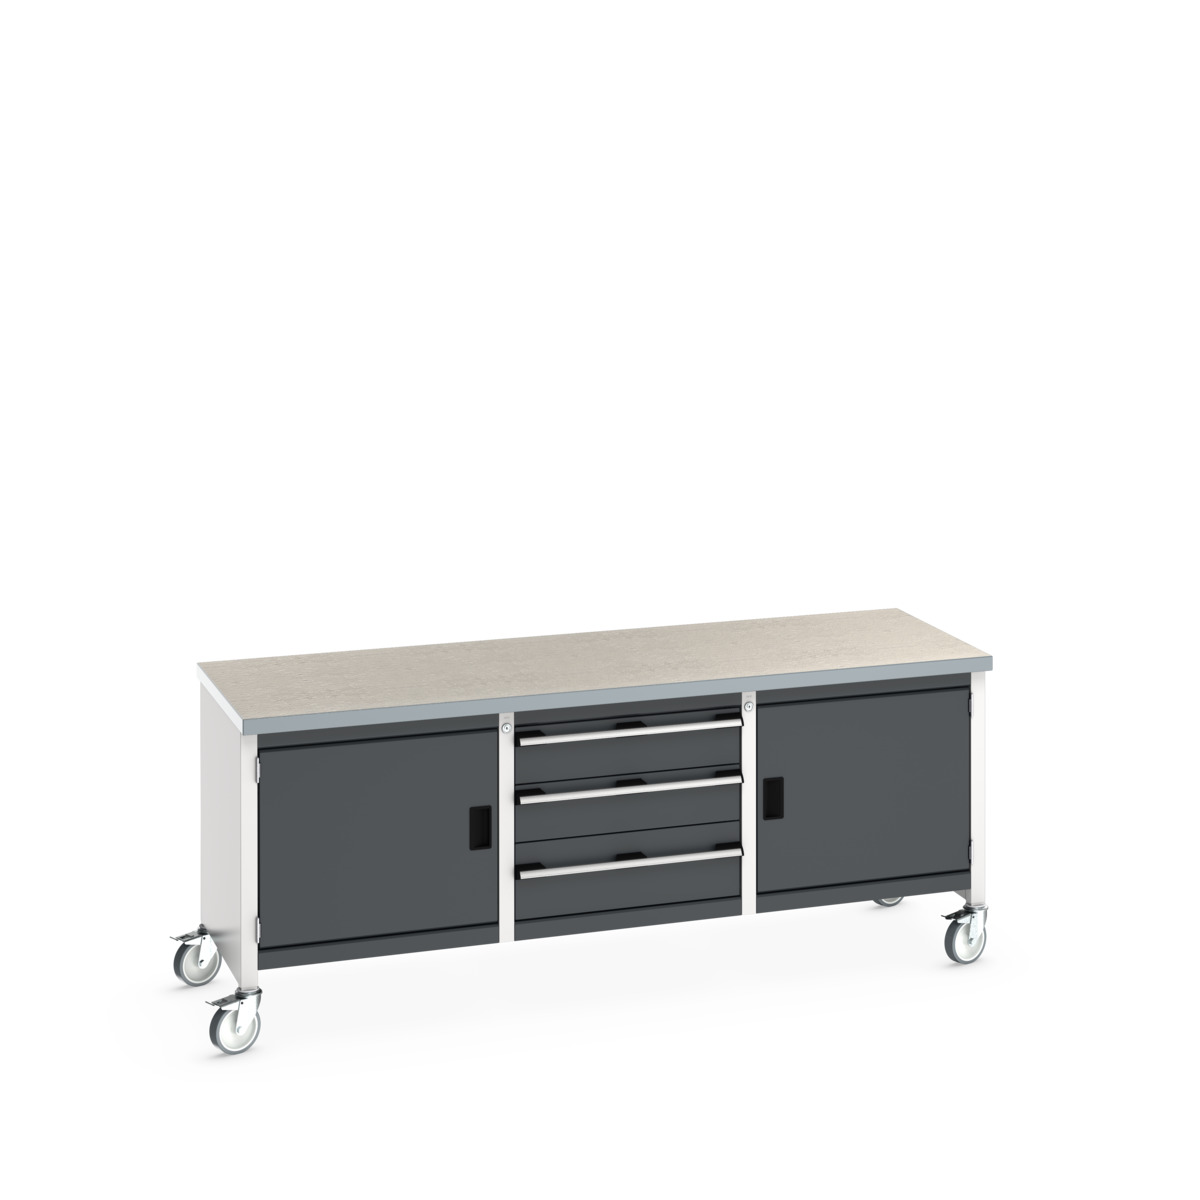 41002126. - cubio mobile storage bench (lino)